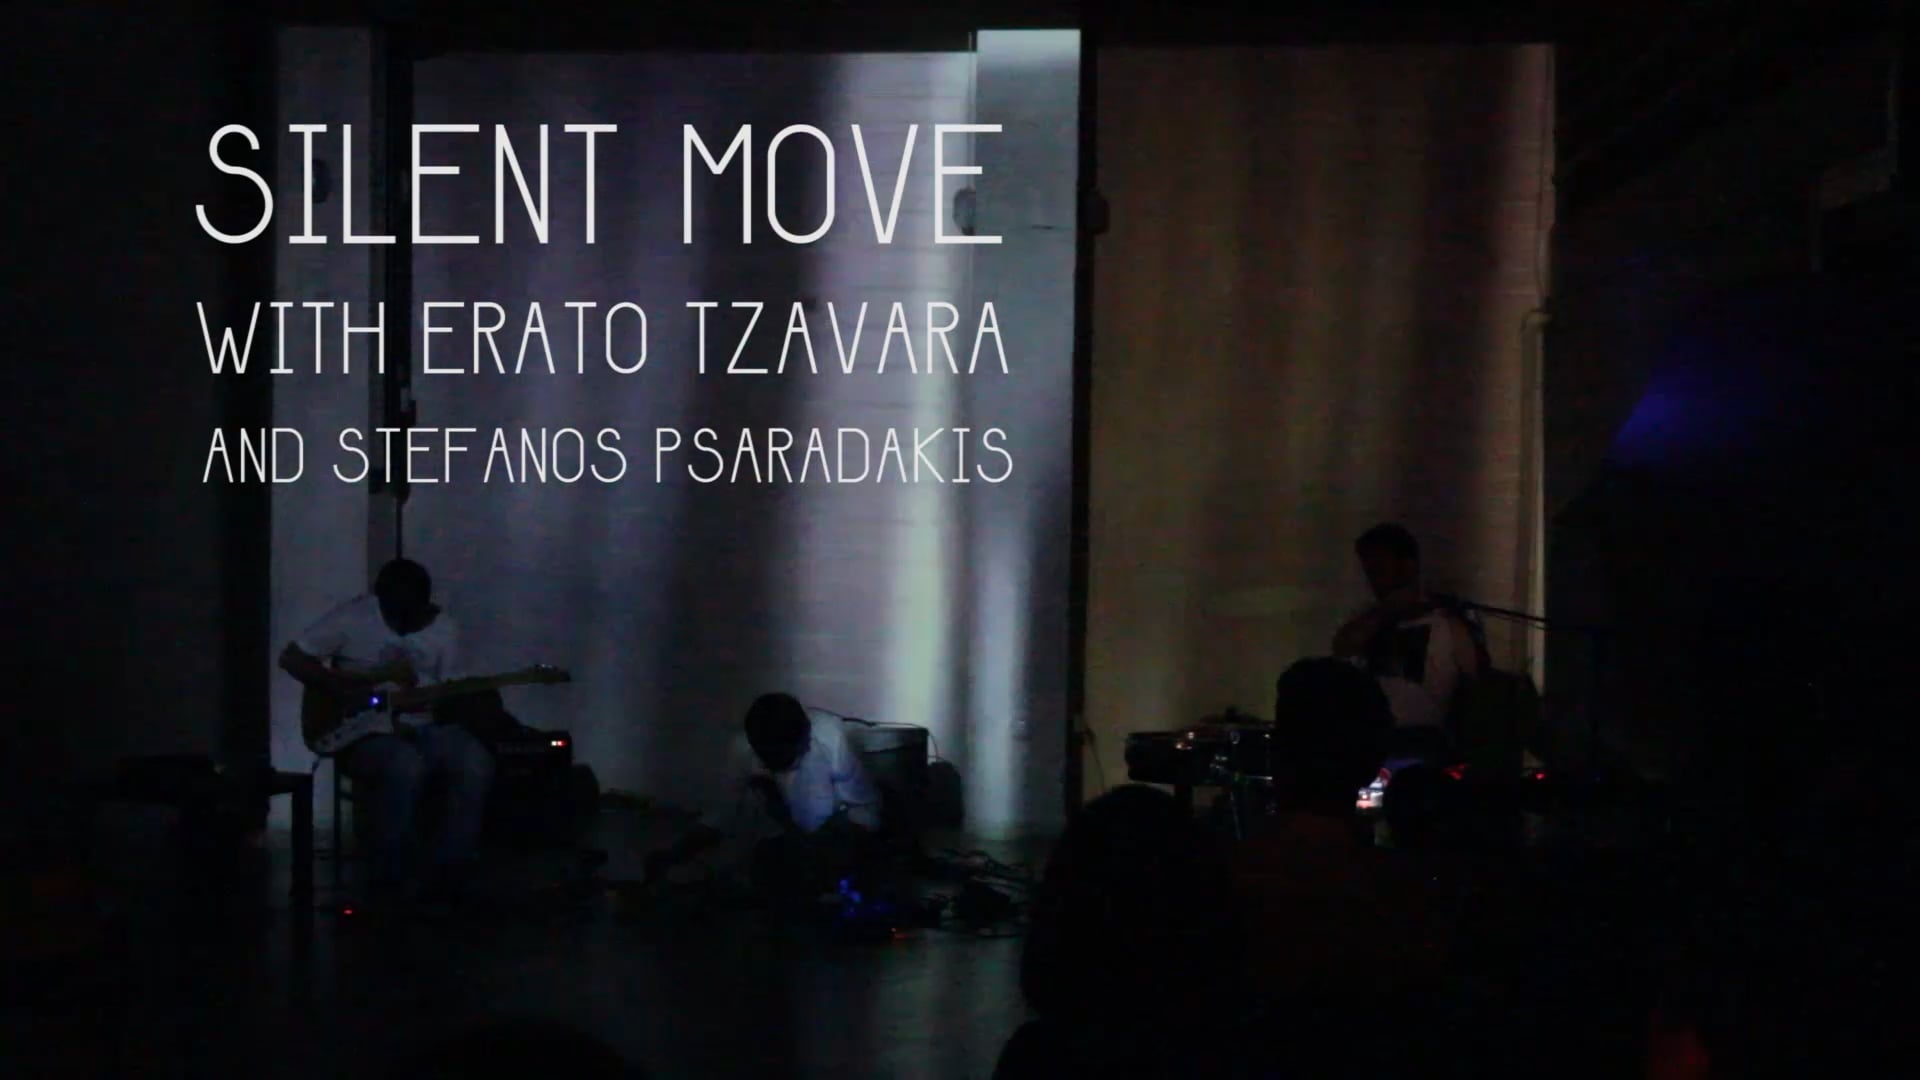 Silent Move with Erato Tzavara and Stefanos Psaradakis at KET, Athens